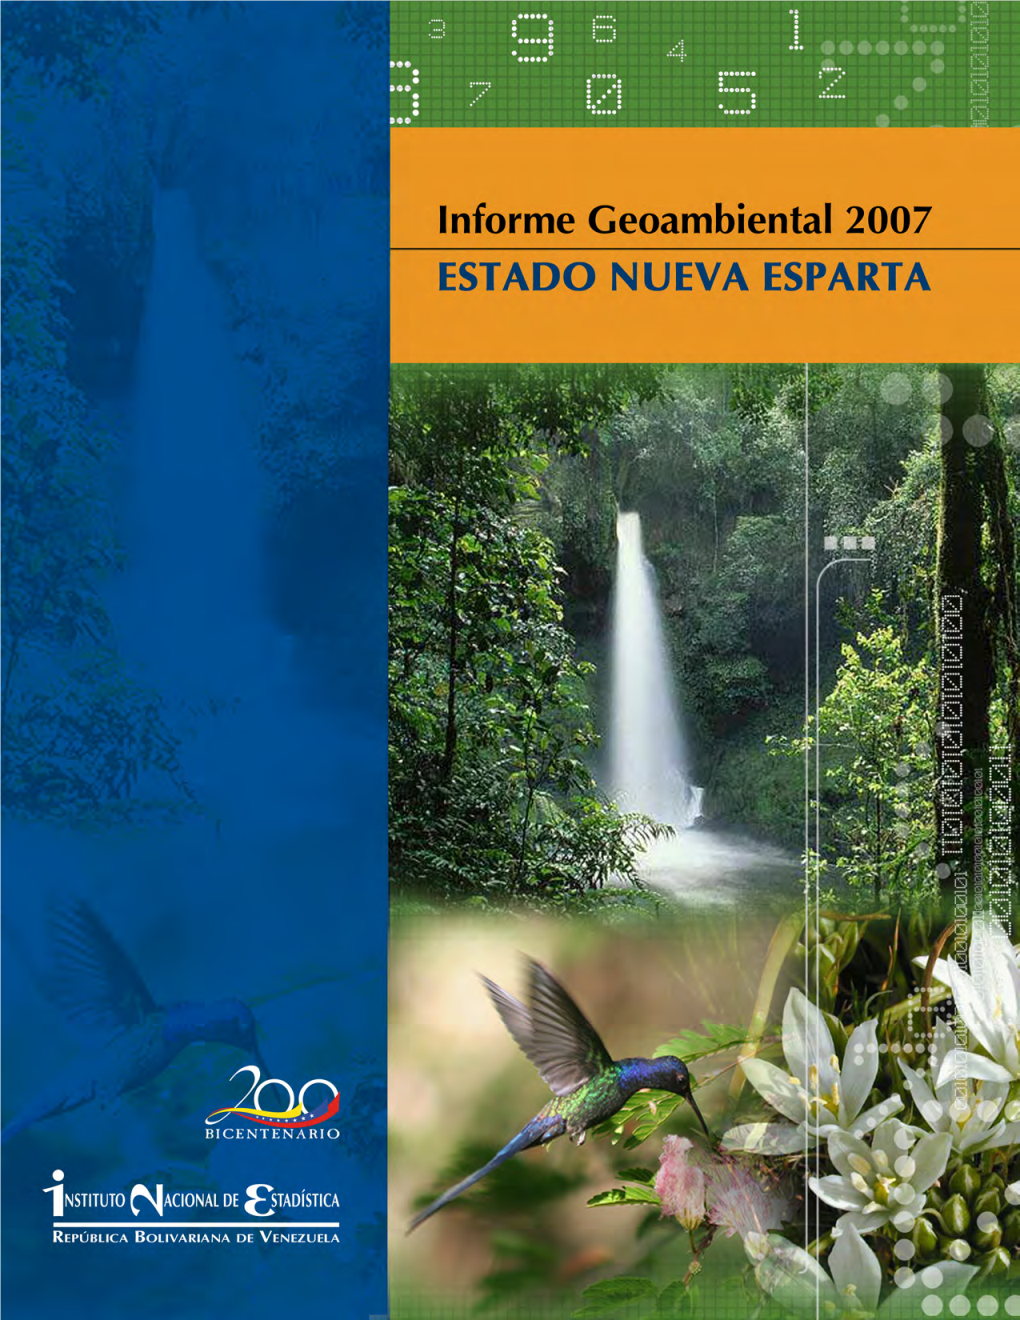 Informe Geoambiental Nueva